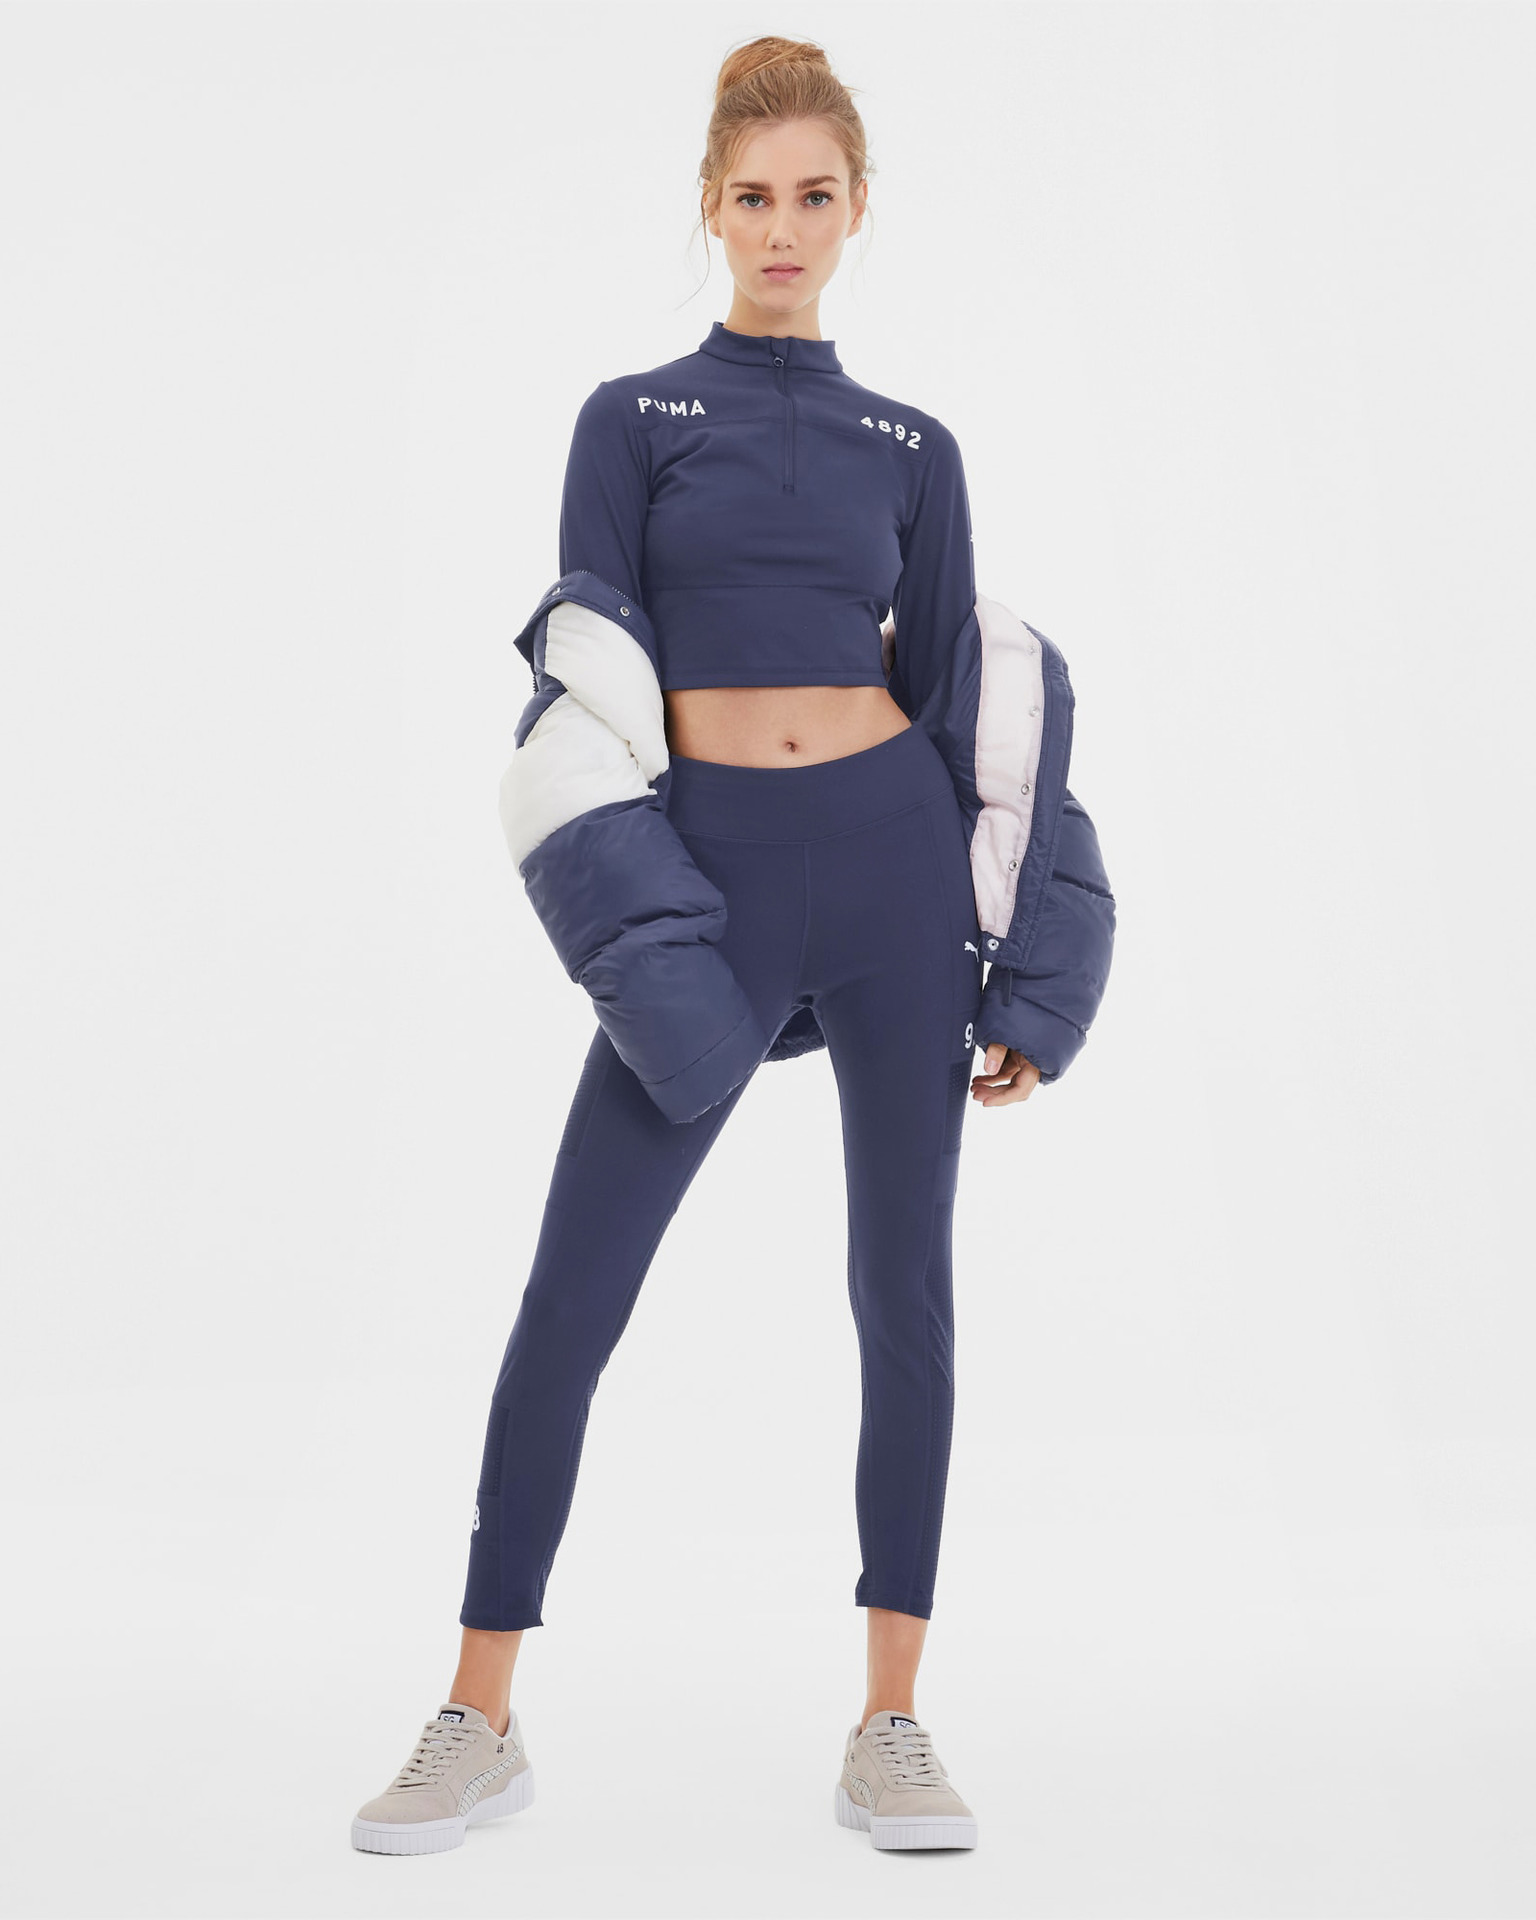 PUMA x Vogue seamless leggings in navy